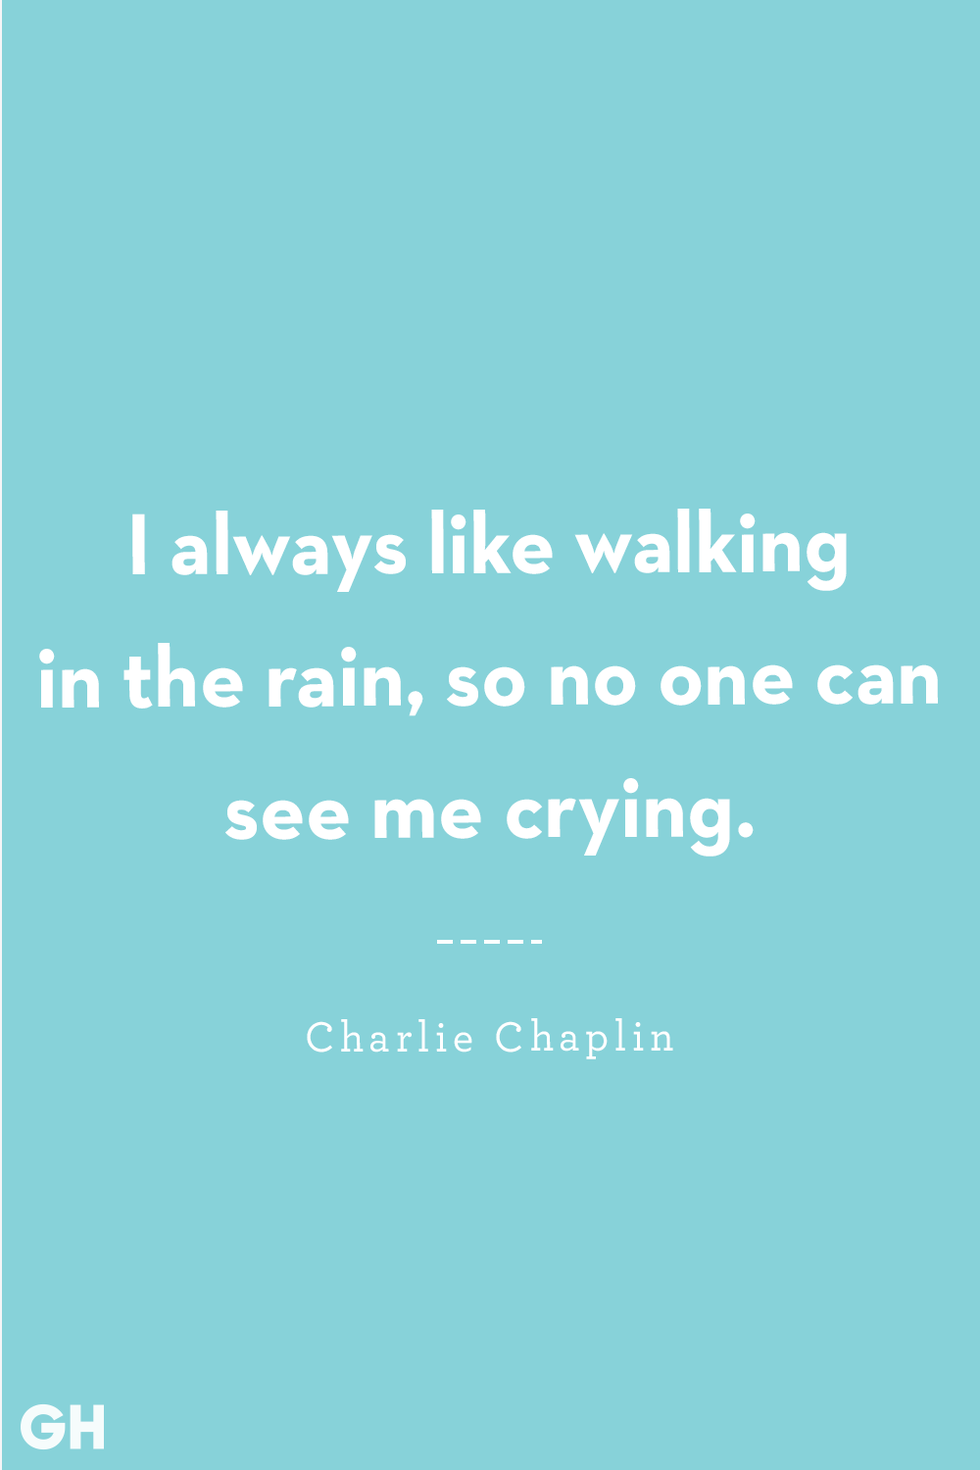 citate triste charlie chaplin